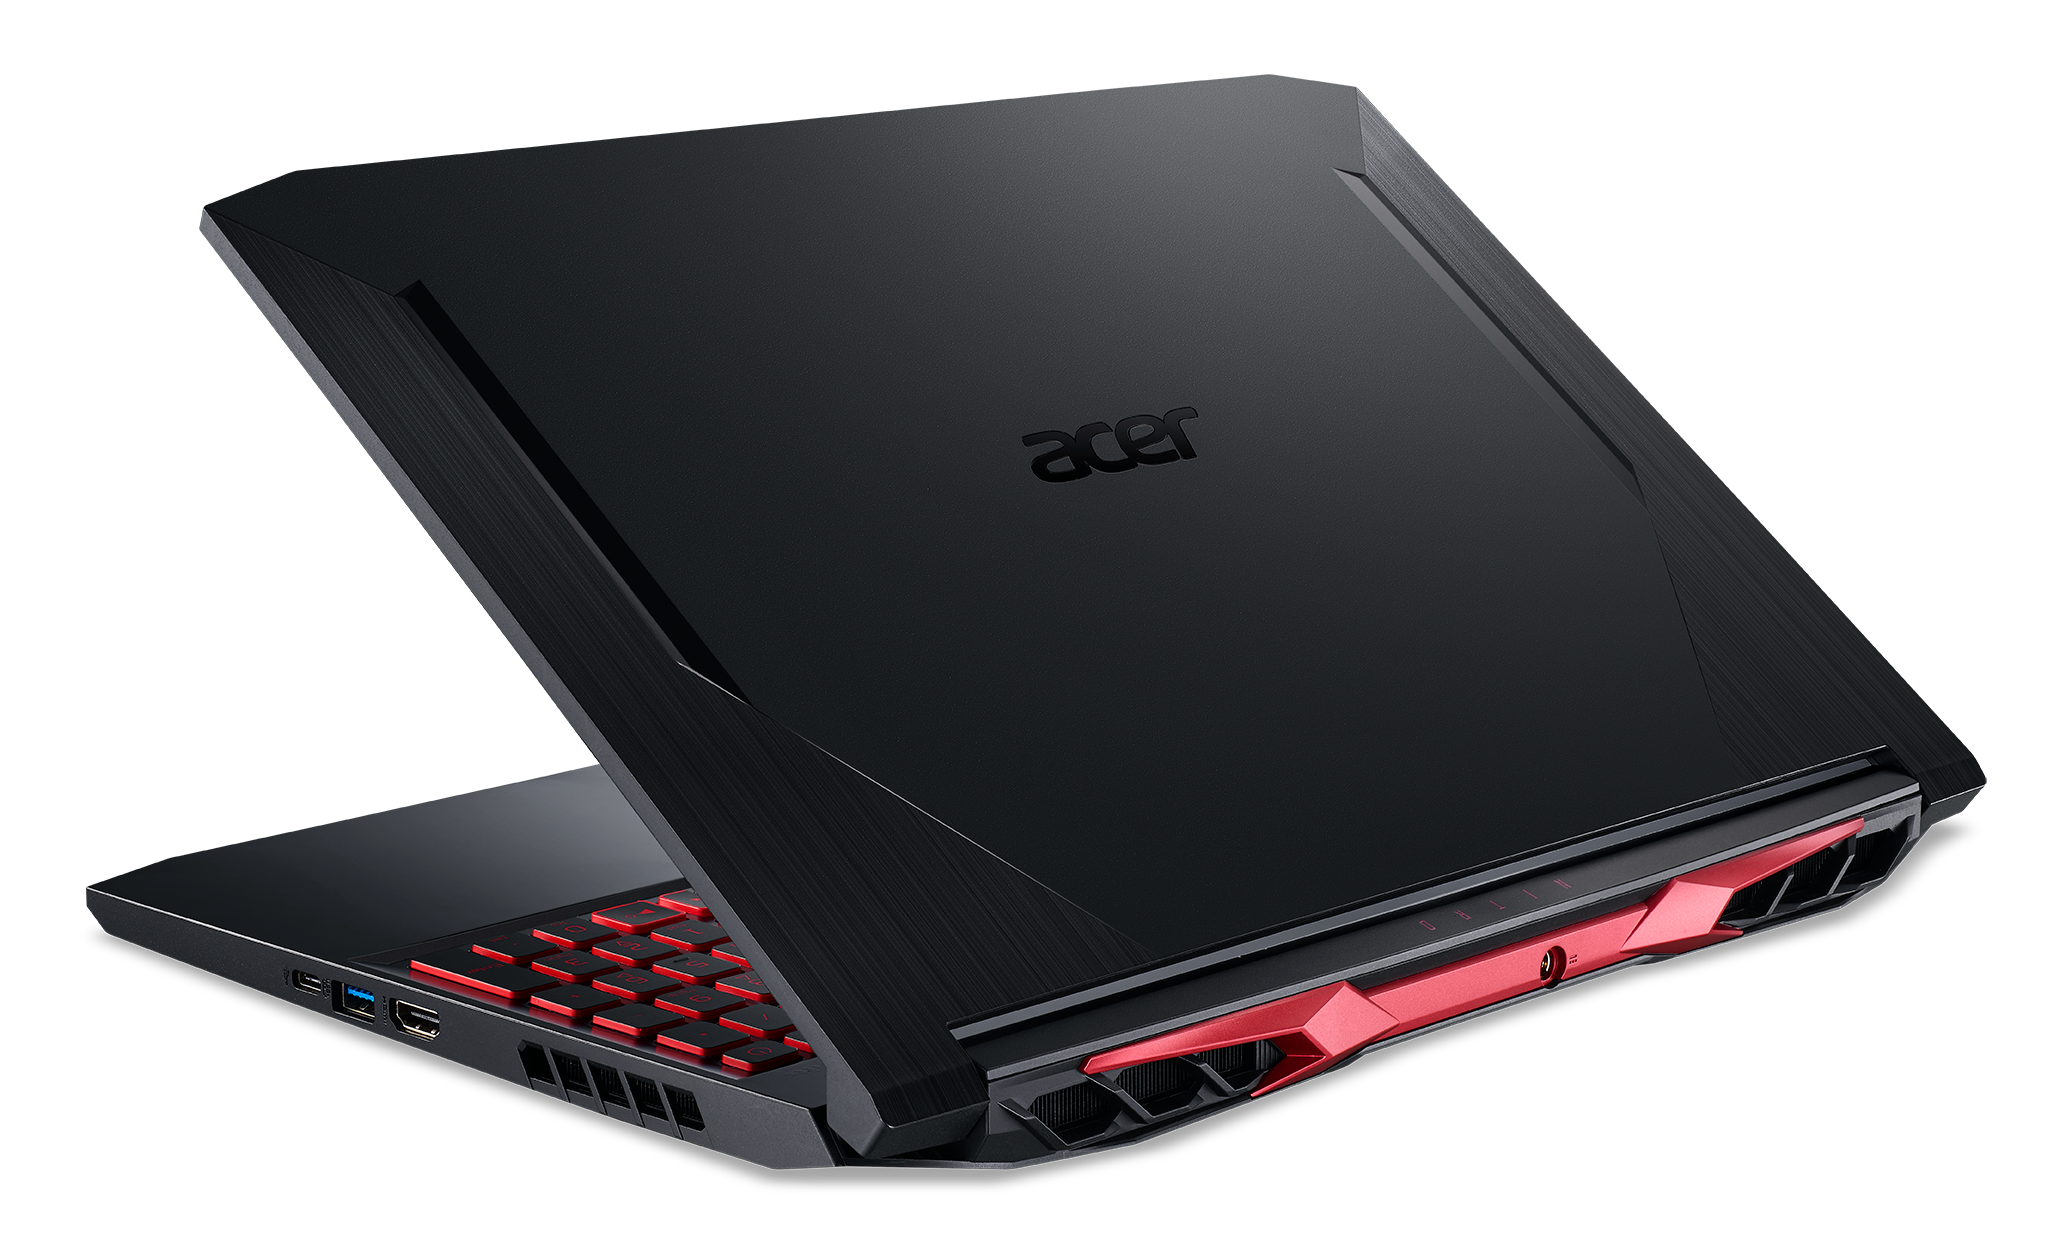 Acer Nitro 5 i5 RTX 3050Ti Gaming Laptop, 15.6" FHD 144Hz IPS Display, Intel Core i5-10300H, NVIDIA GeForce RTX 3050Ti, 16GB DDR4, 512GB NVMe SSD, Black, Windows 10 Home, AN515-55-57C4 - image 5 of 10